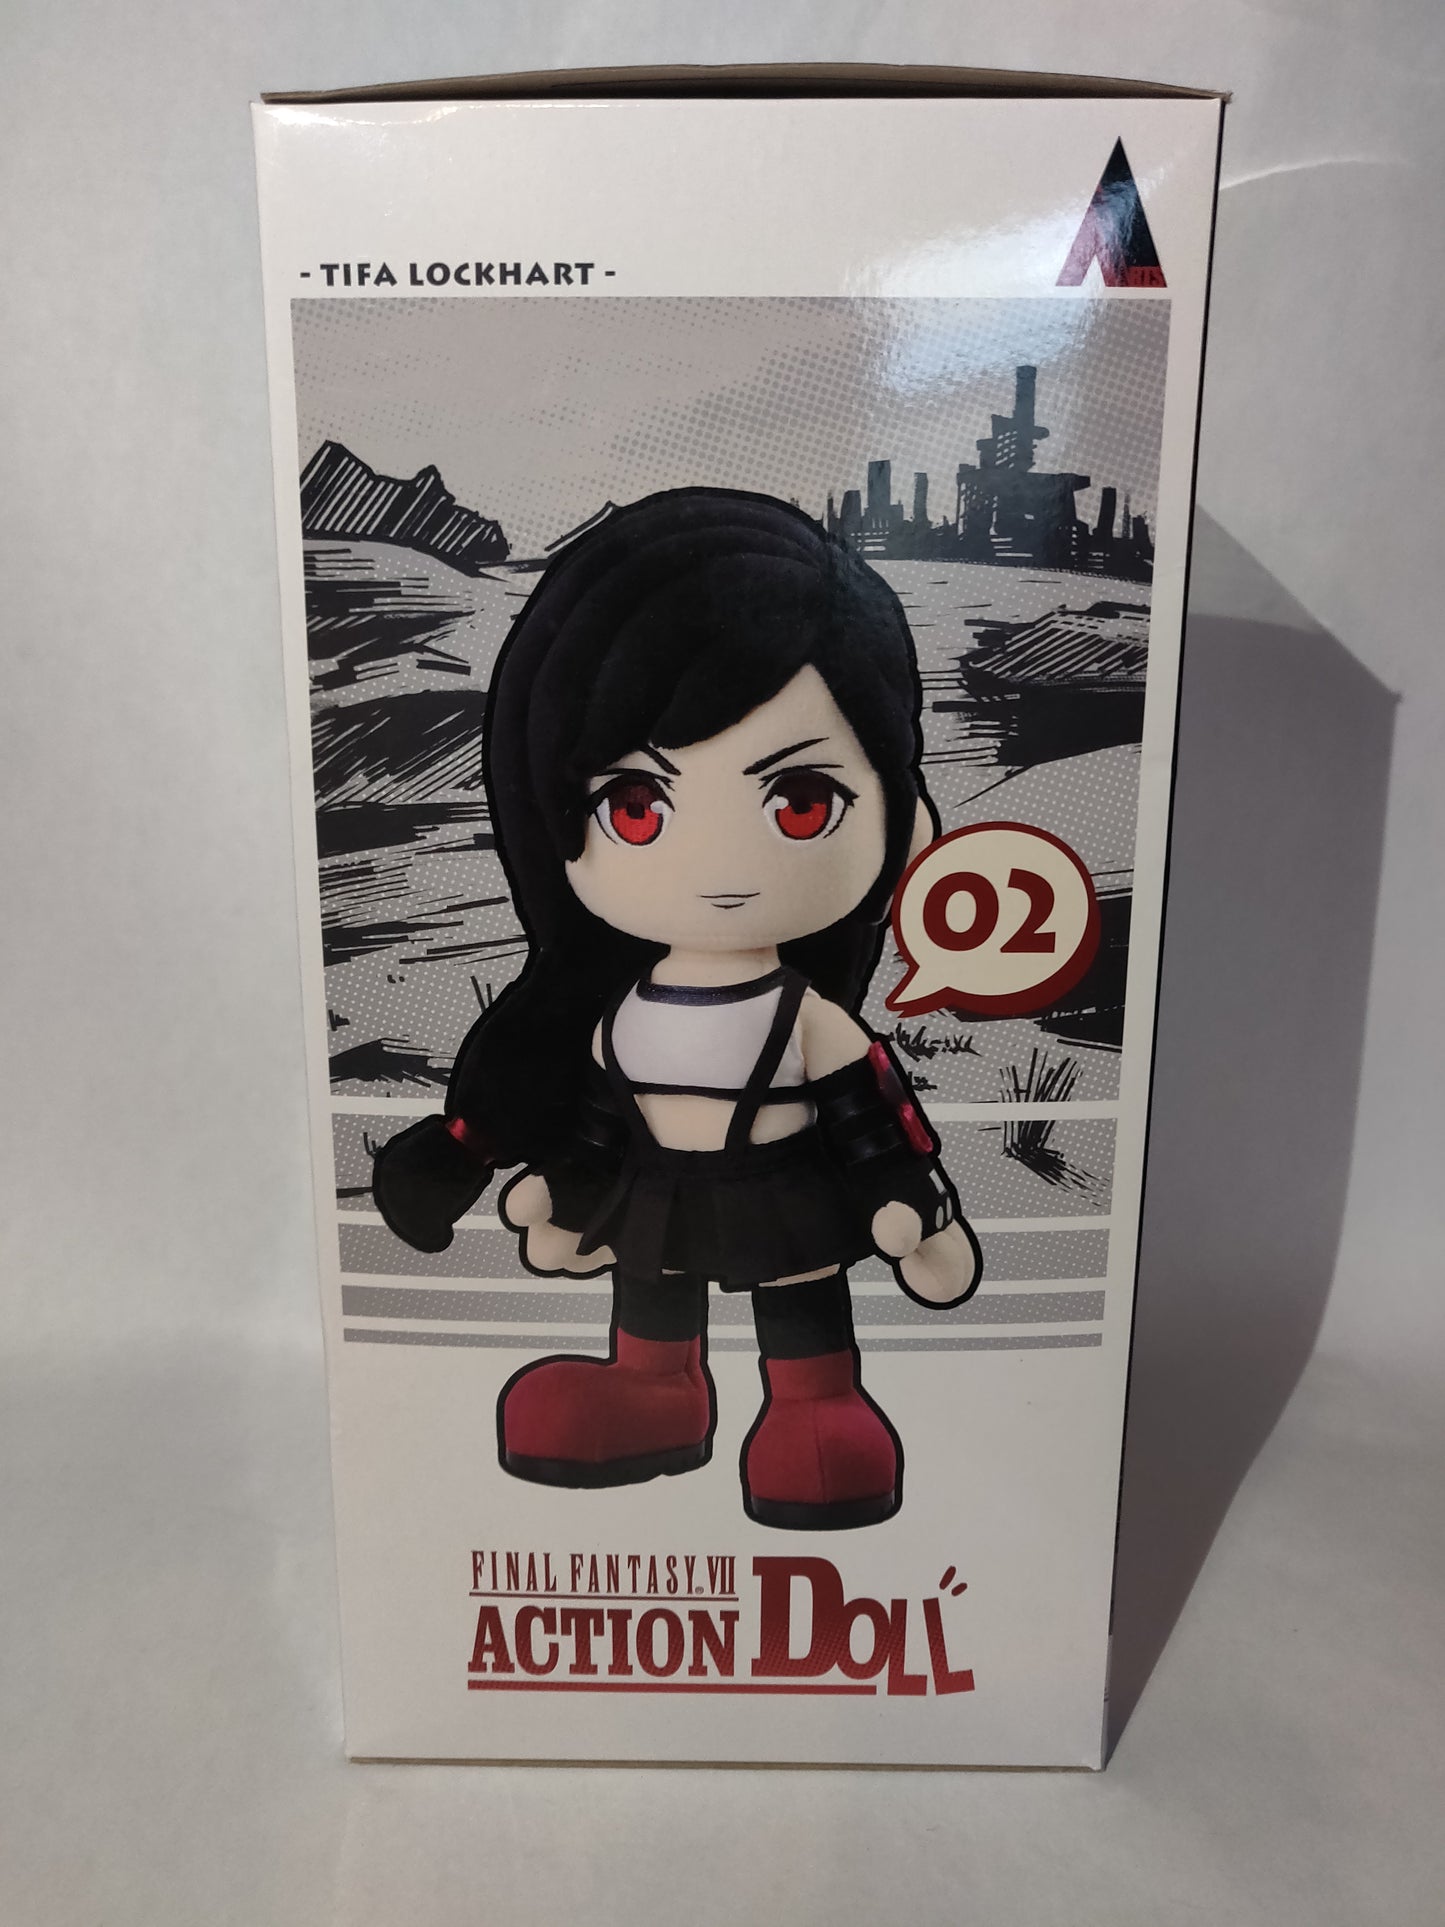 Final Fantasy VII Action Doll Tifa Lockhart